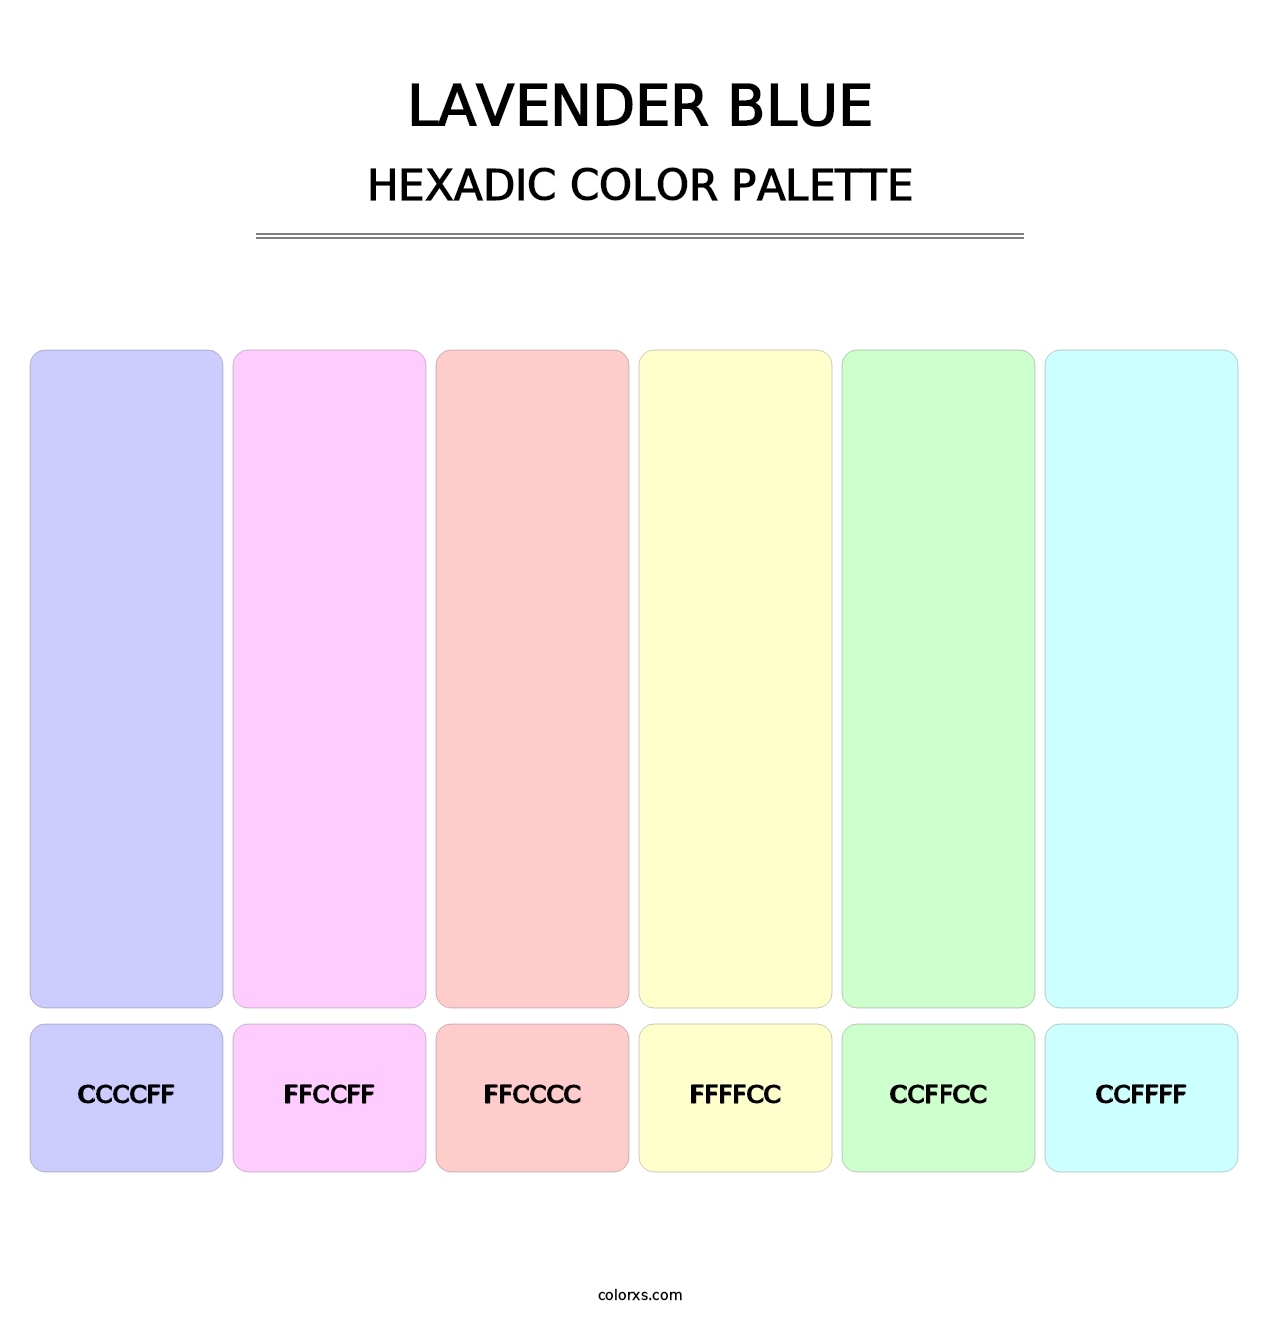 Lavender Blue - Hexadic Color Palette